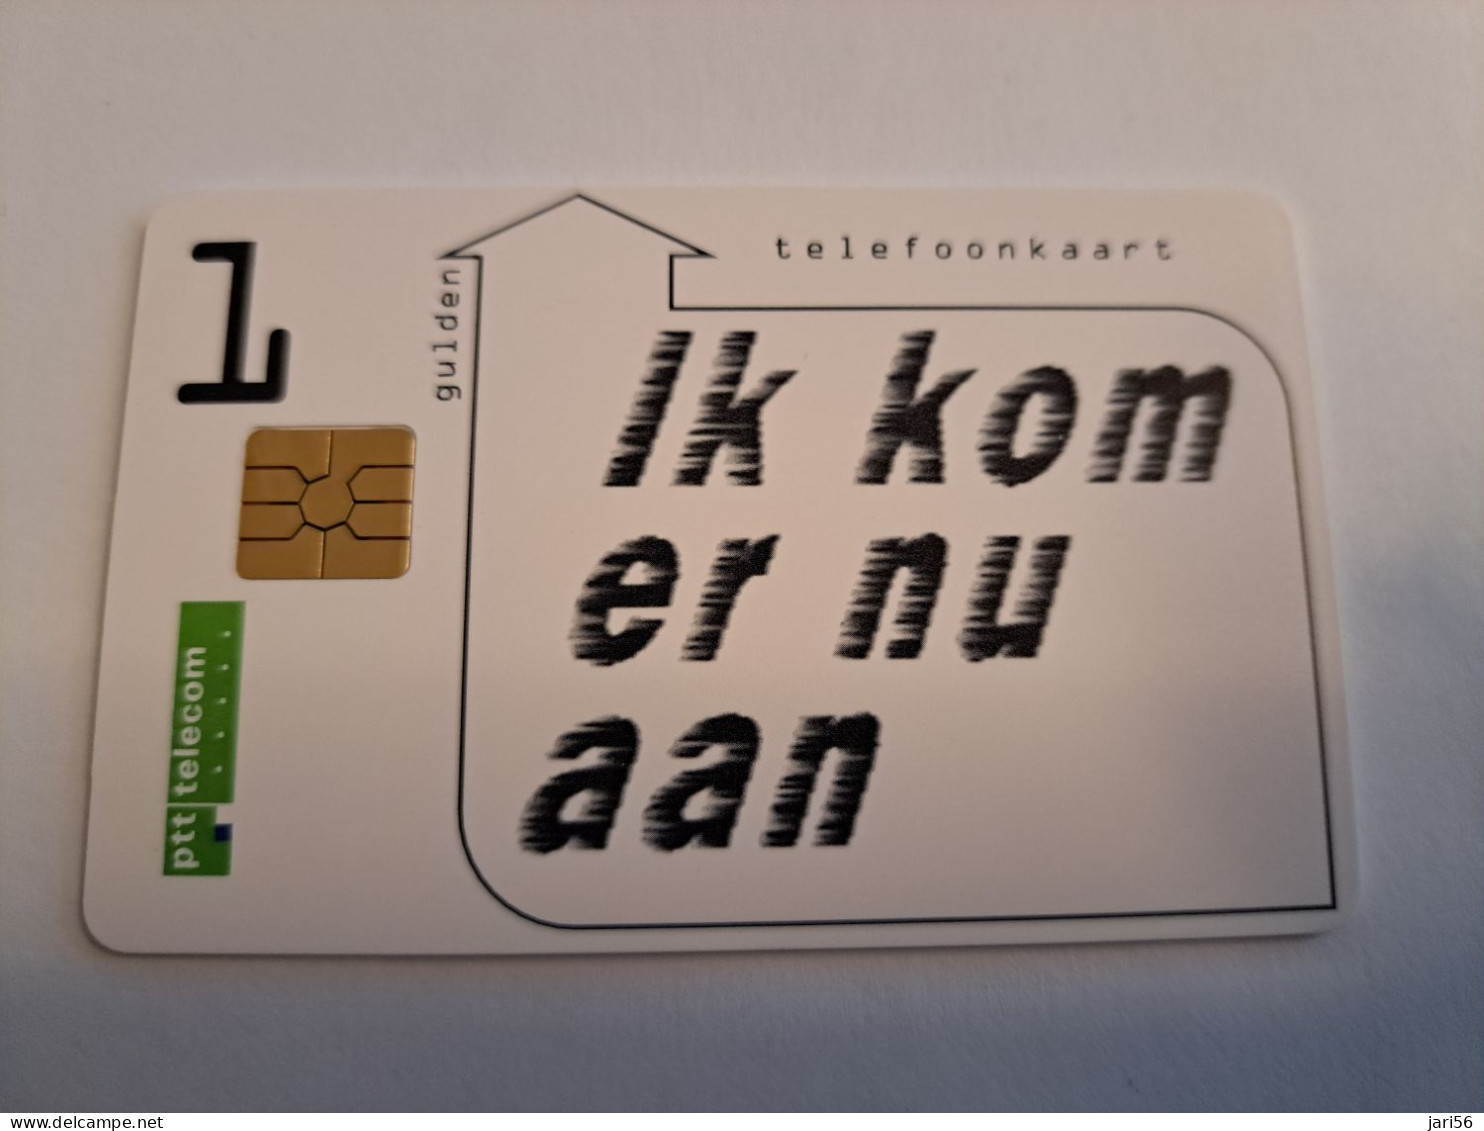 NETHERLANDS  HFL 1,00    CC  MINT CHIP CARD   / COMPLIMENTSCARD / FROM SERIE / MINT   ** 15953** - GSM-Kaarten, Bijvulling & Vooraf Betaalde